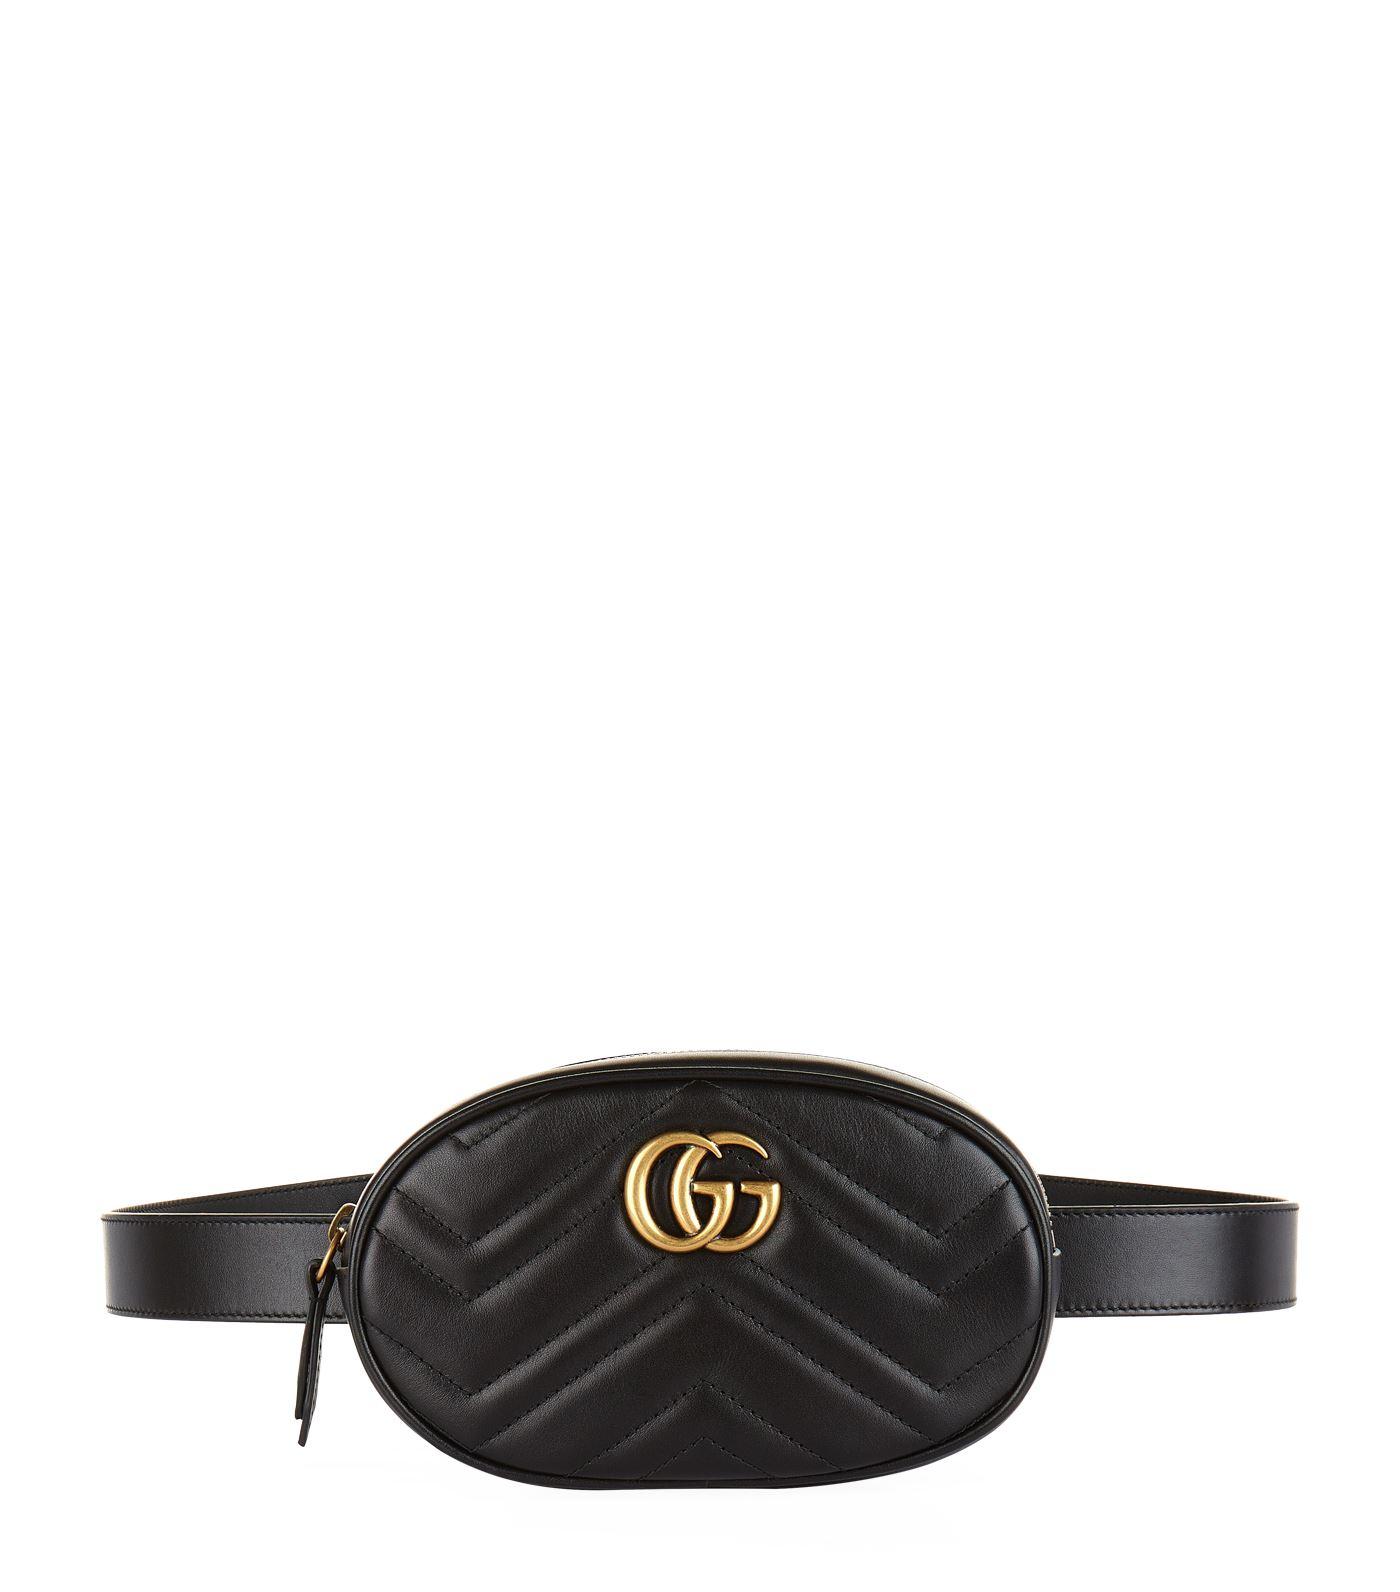 Gucci GG Marmont Matelassé Leather Belt Bag in Black - Save 4% - Lyst